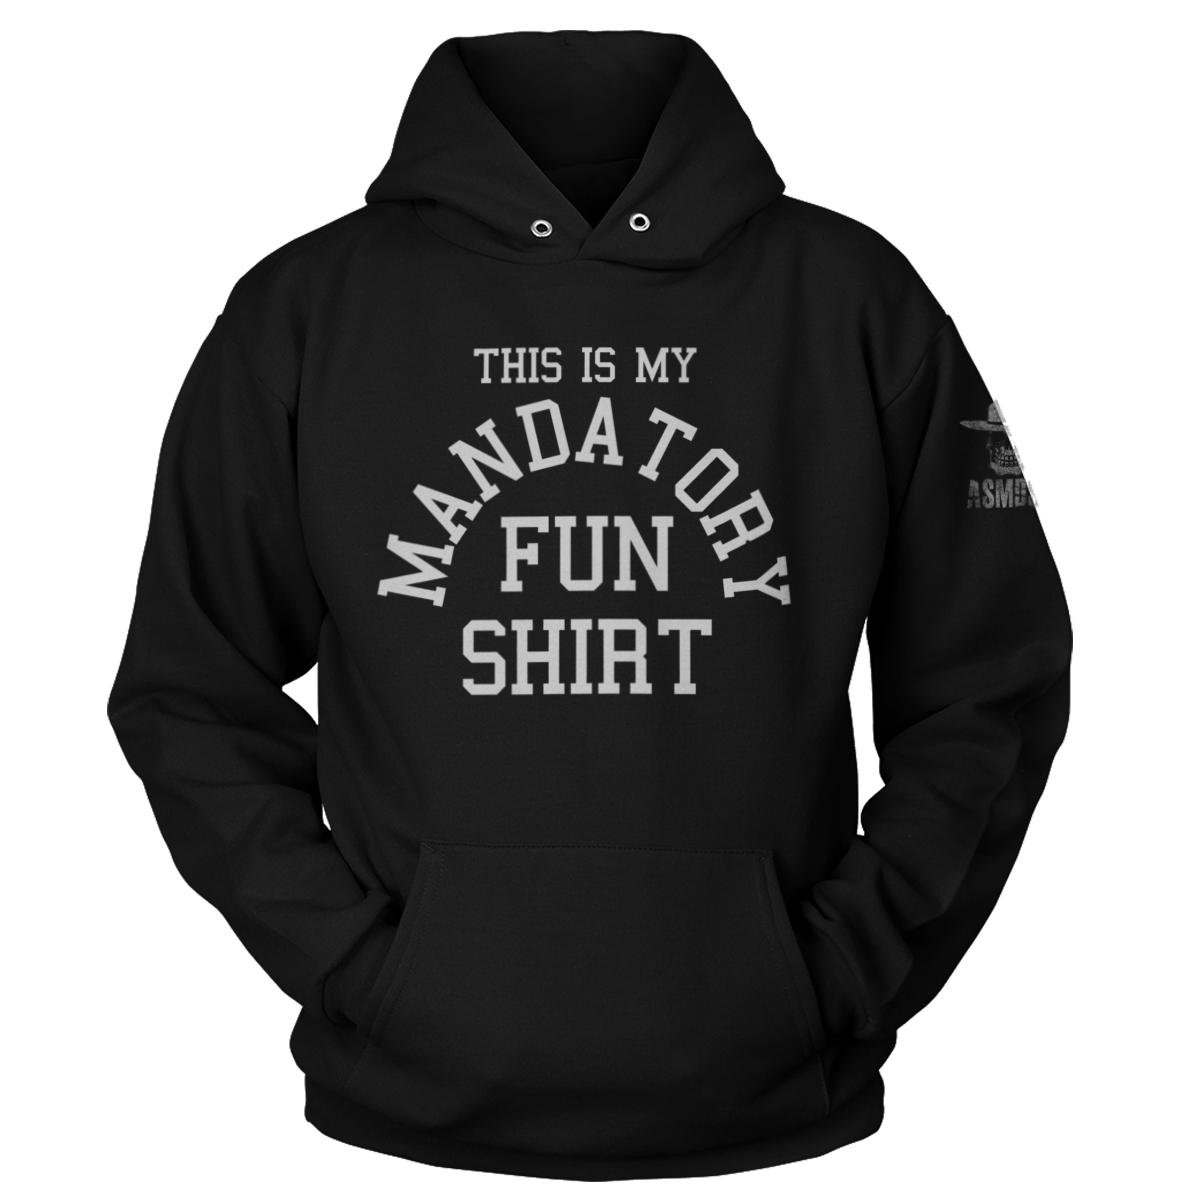 Mandatory Fun Shirt (Ladies)